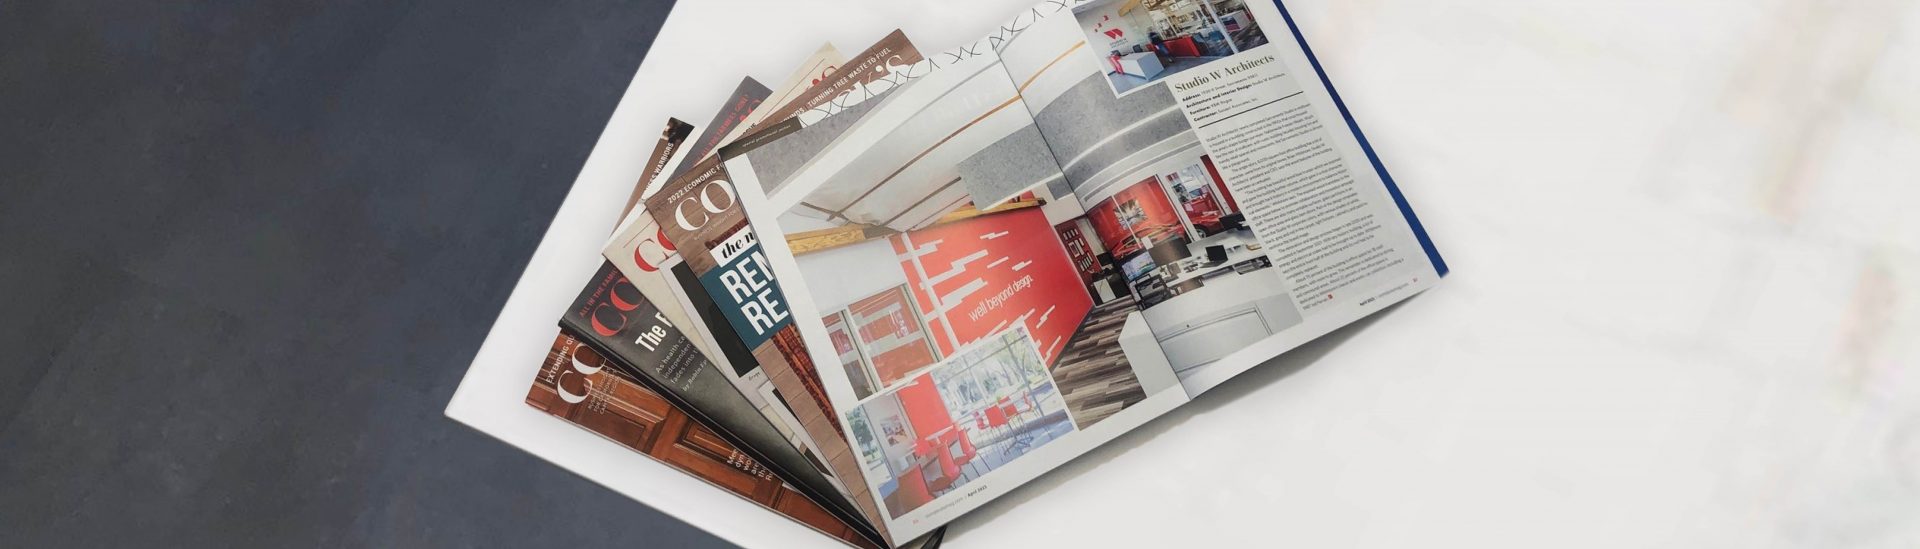 Comstock’s Magazine Features Studio W’s Midtown Office